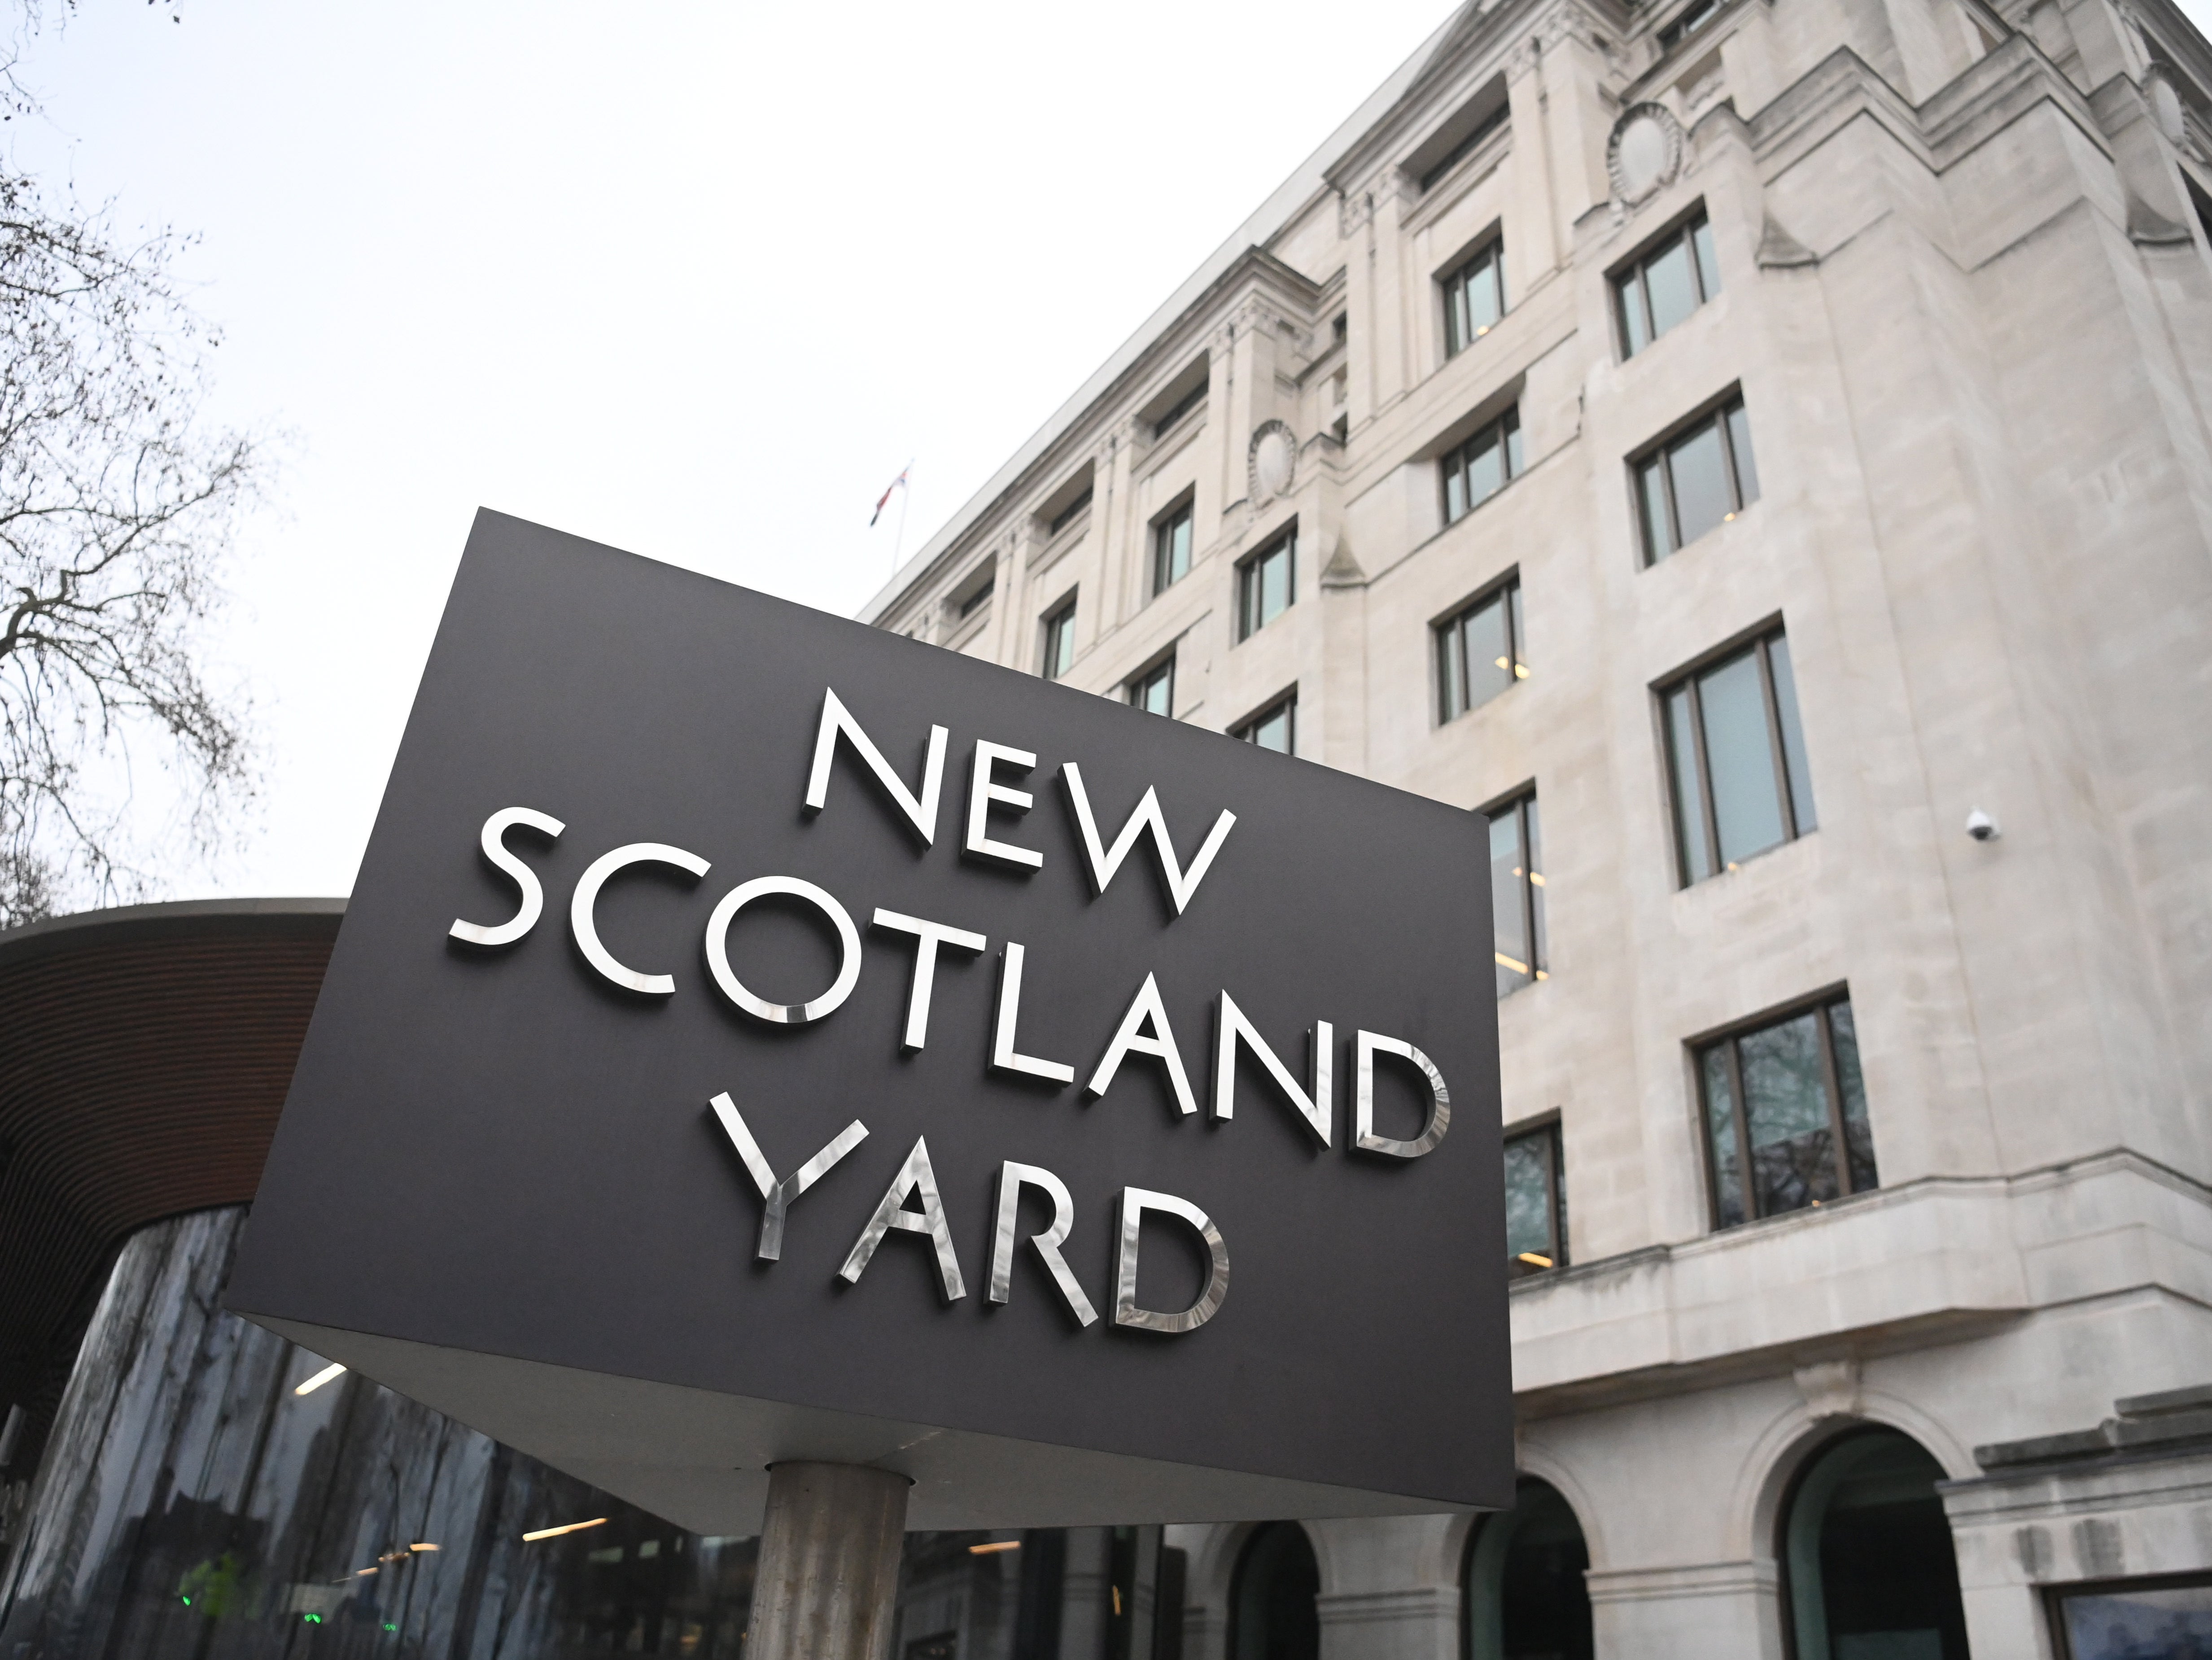 New Scotland Yard, headquarters of the Metropolitan Police